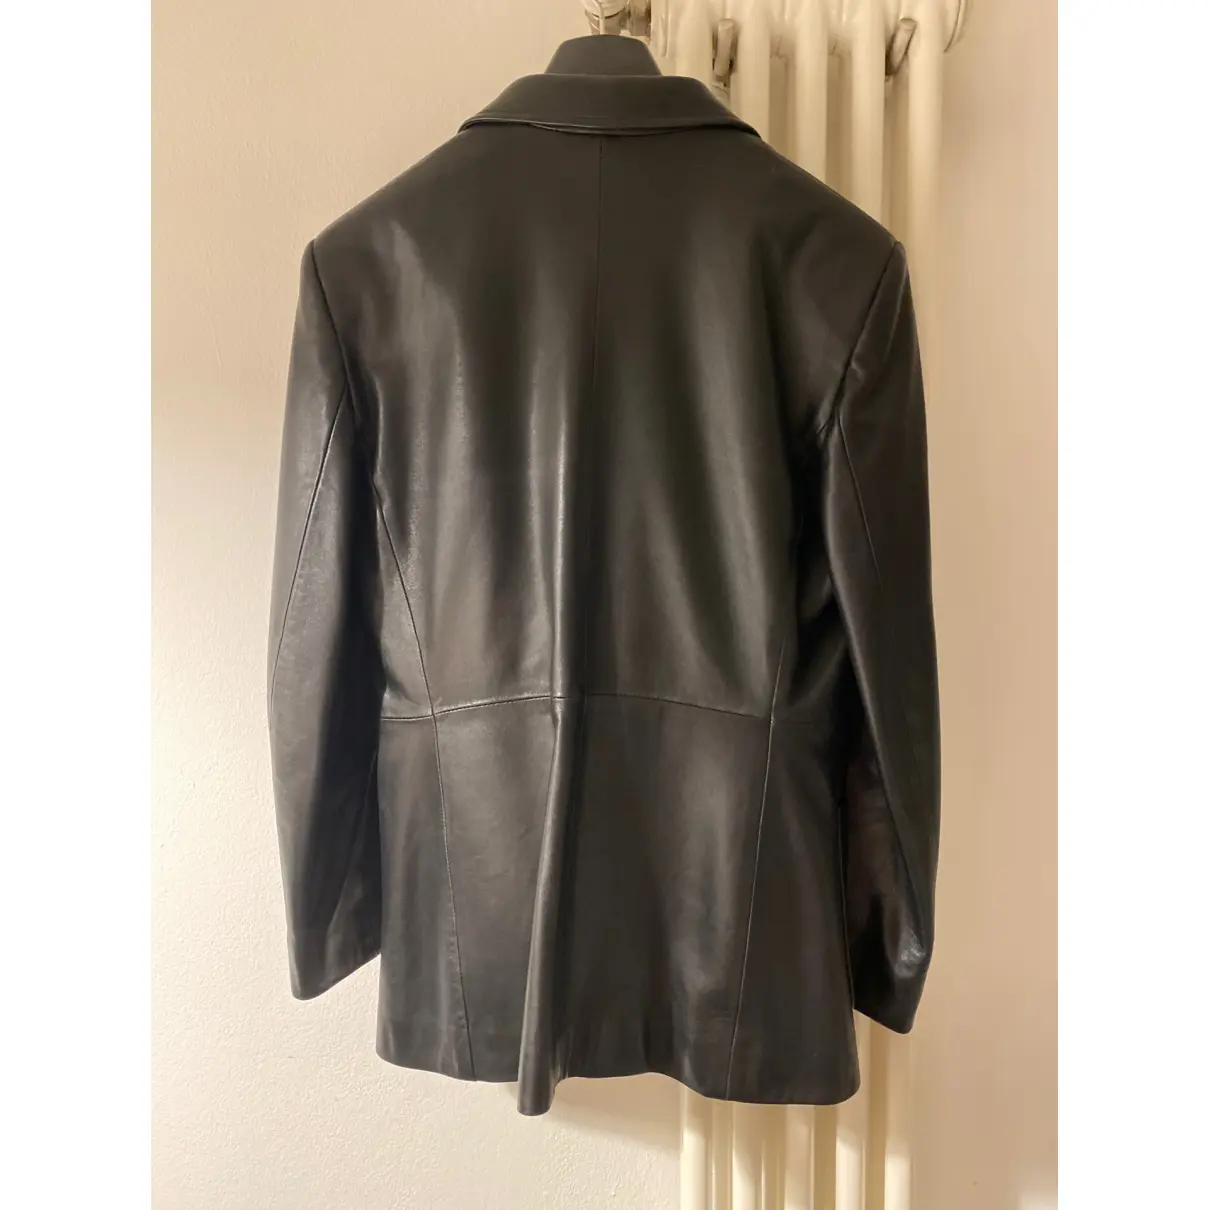 Buy Marella Leather blazer online